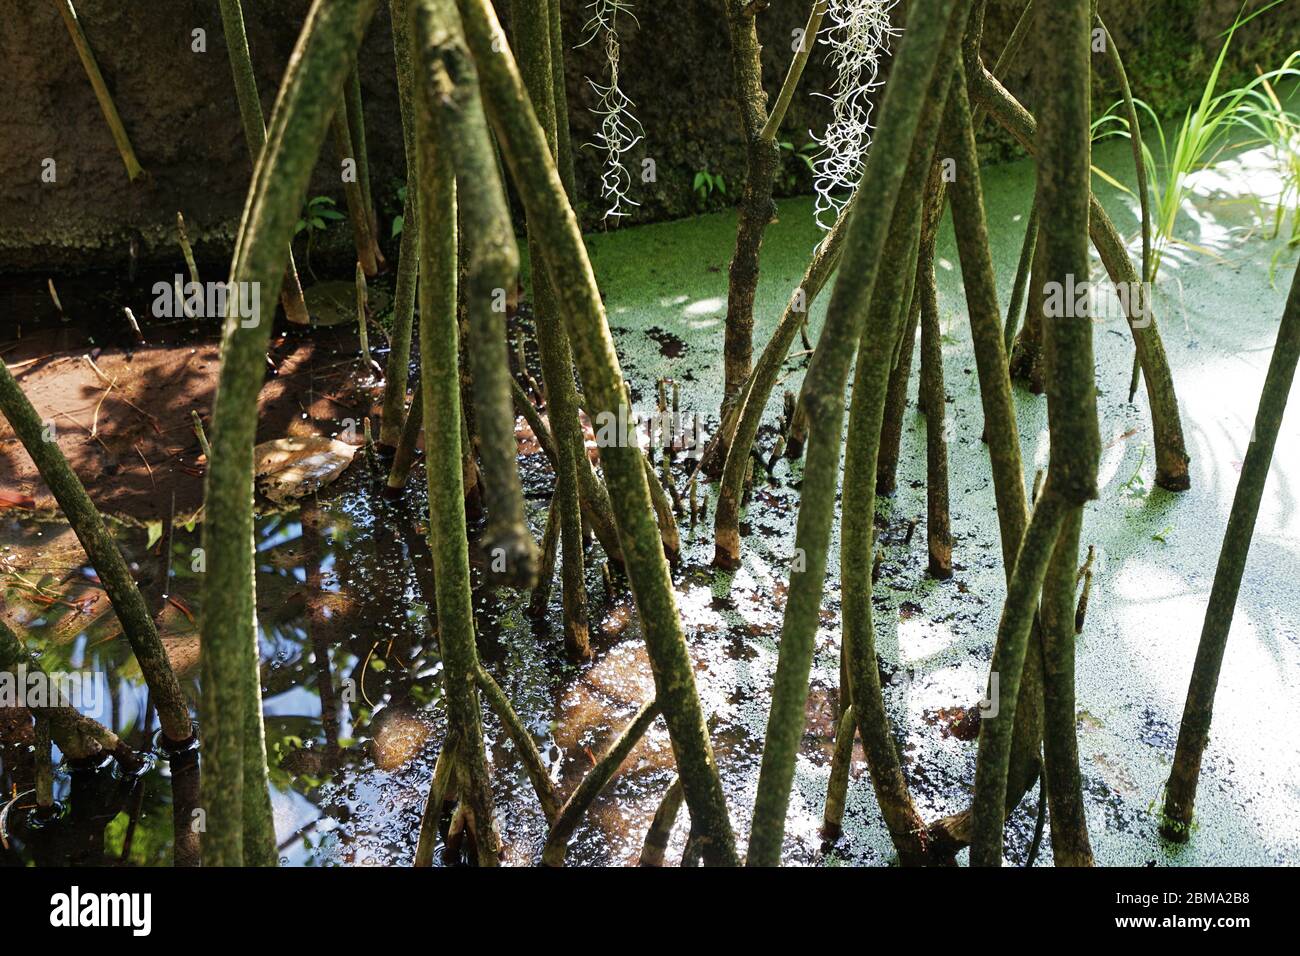 Mangrovie rosse americane, famiglia Rhizophora mangle Foto Stock